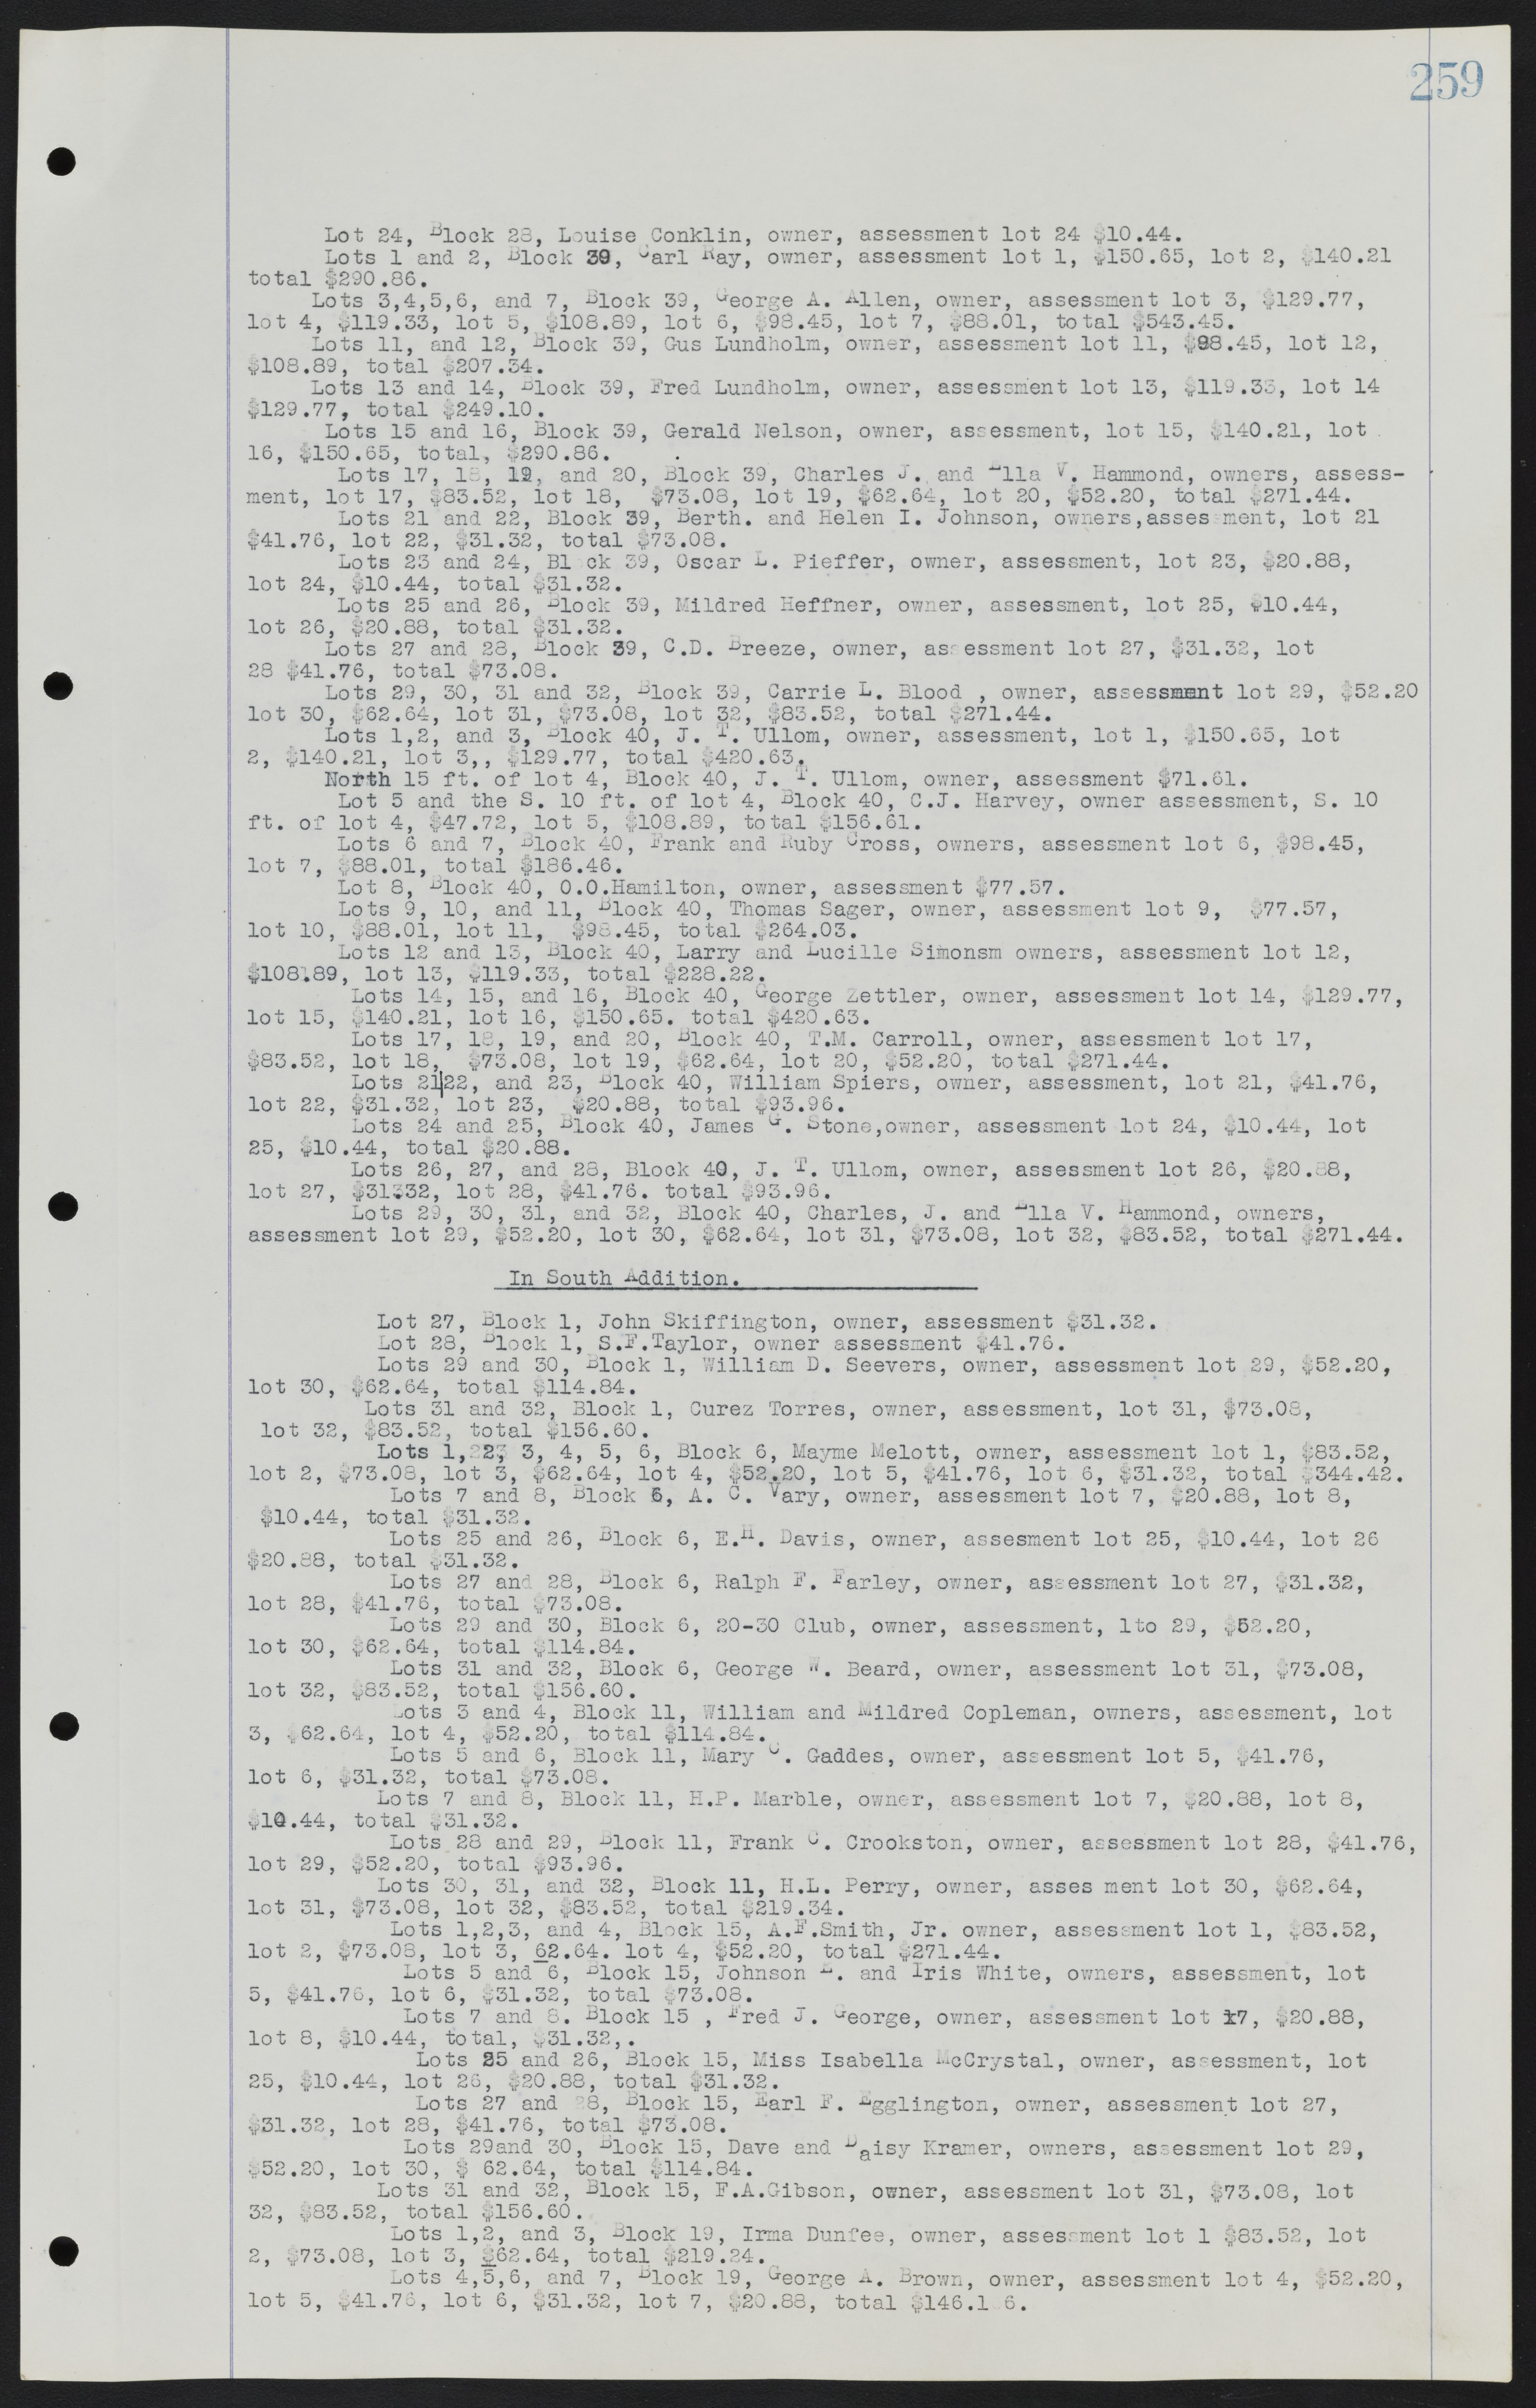 Las Vegas City Ordinances, July 18, 1911 to March 31, 1933, lvc000013-263